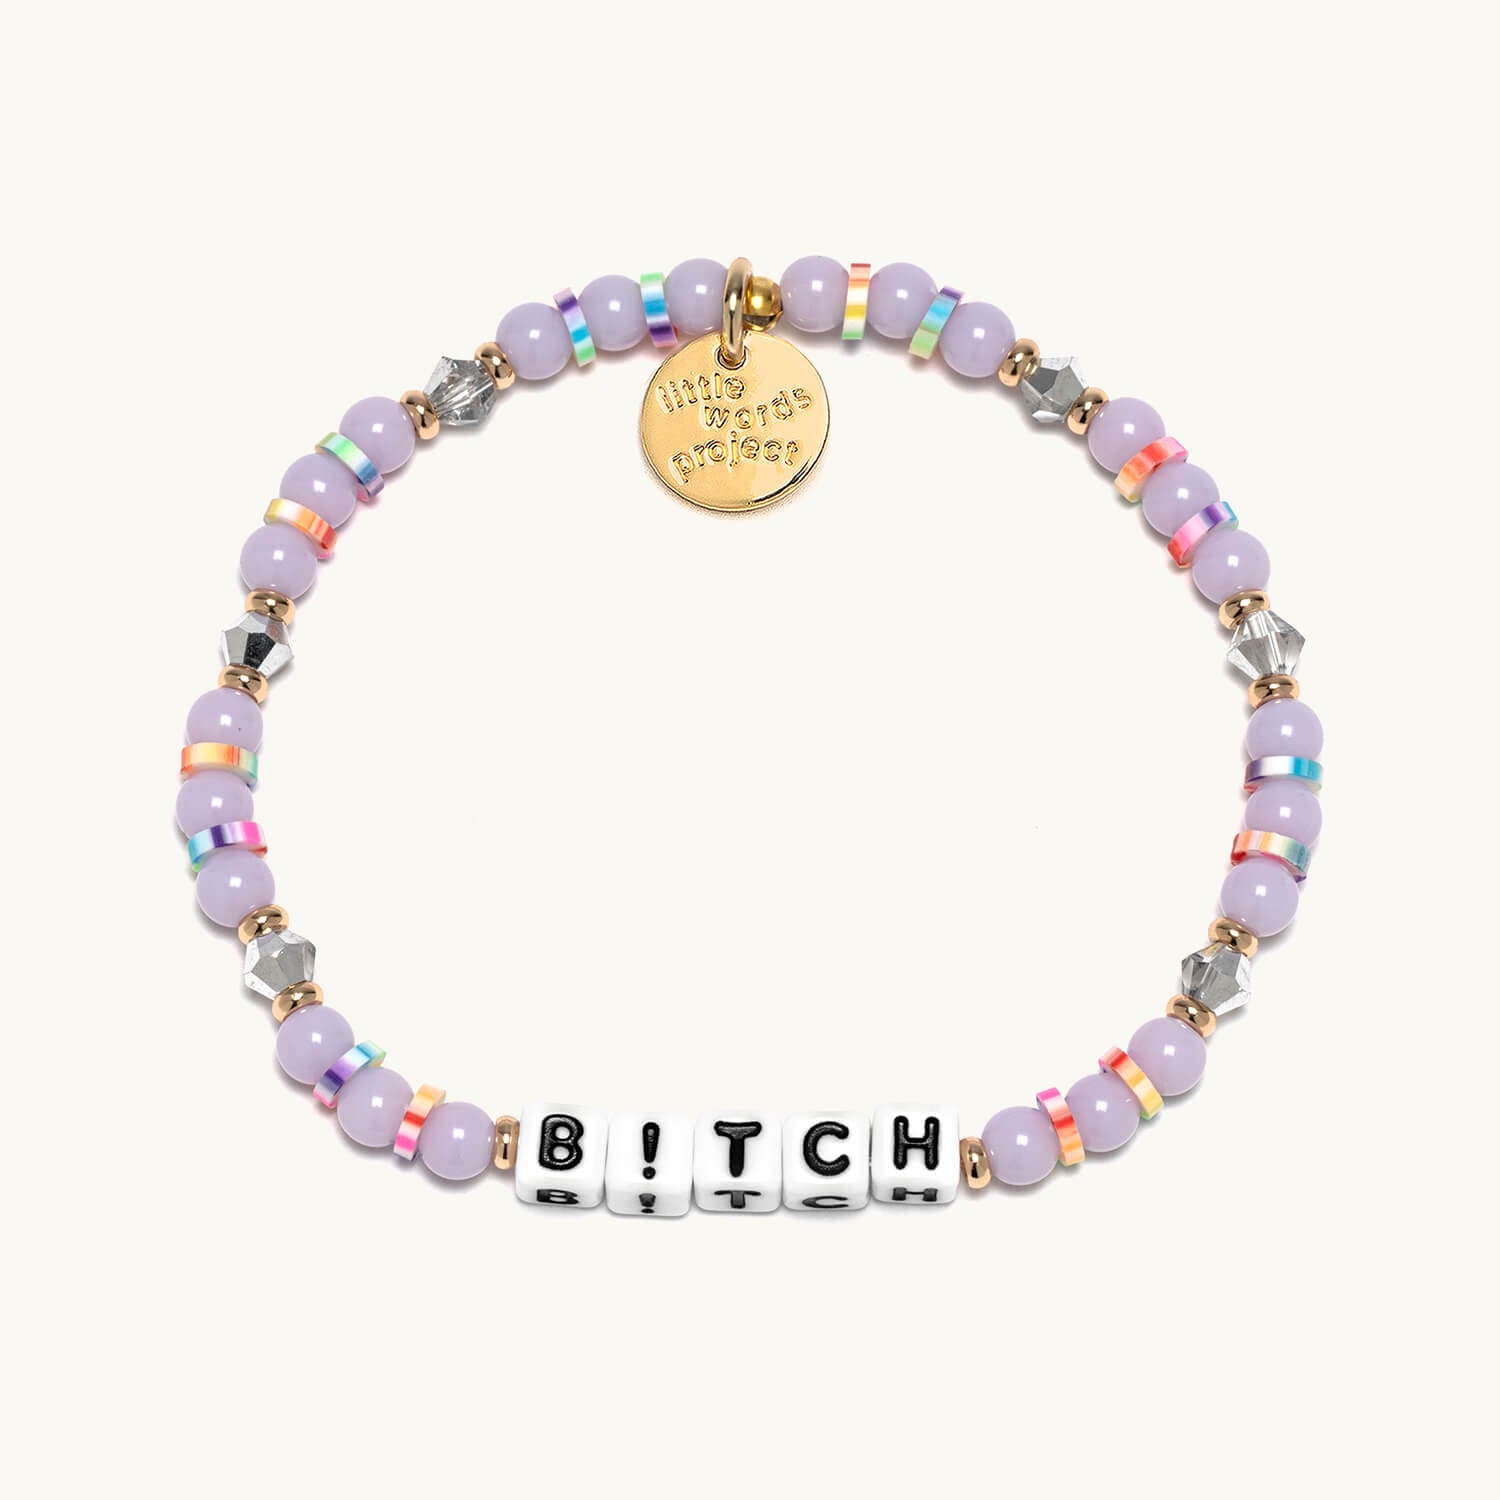 B!tch- Women's History Month Bracelet